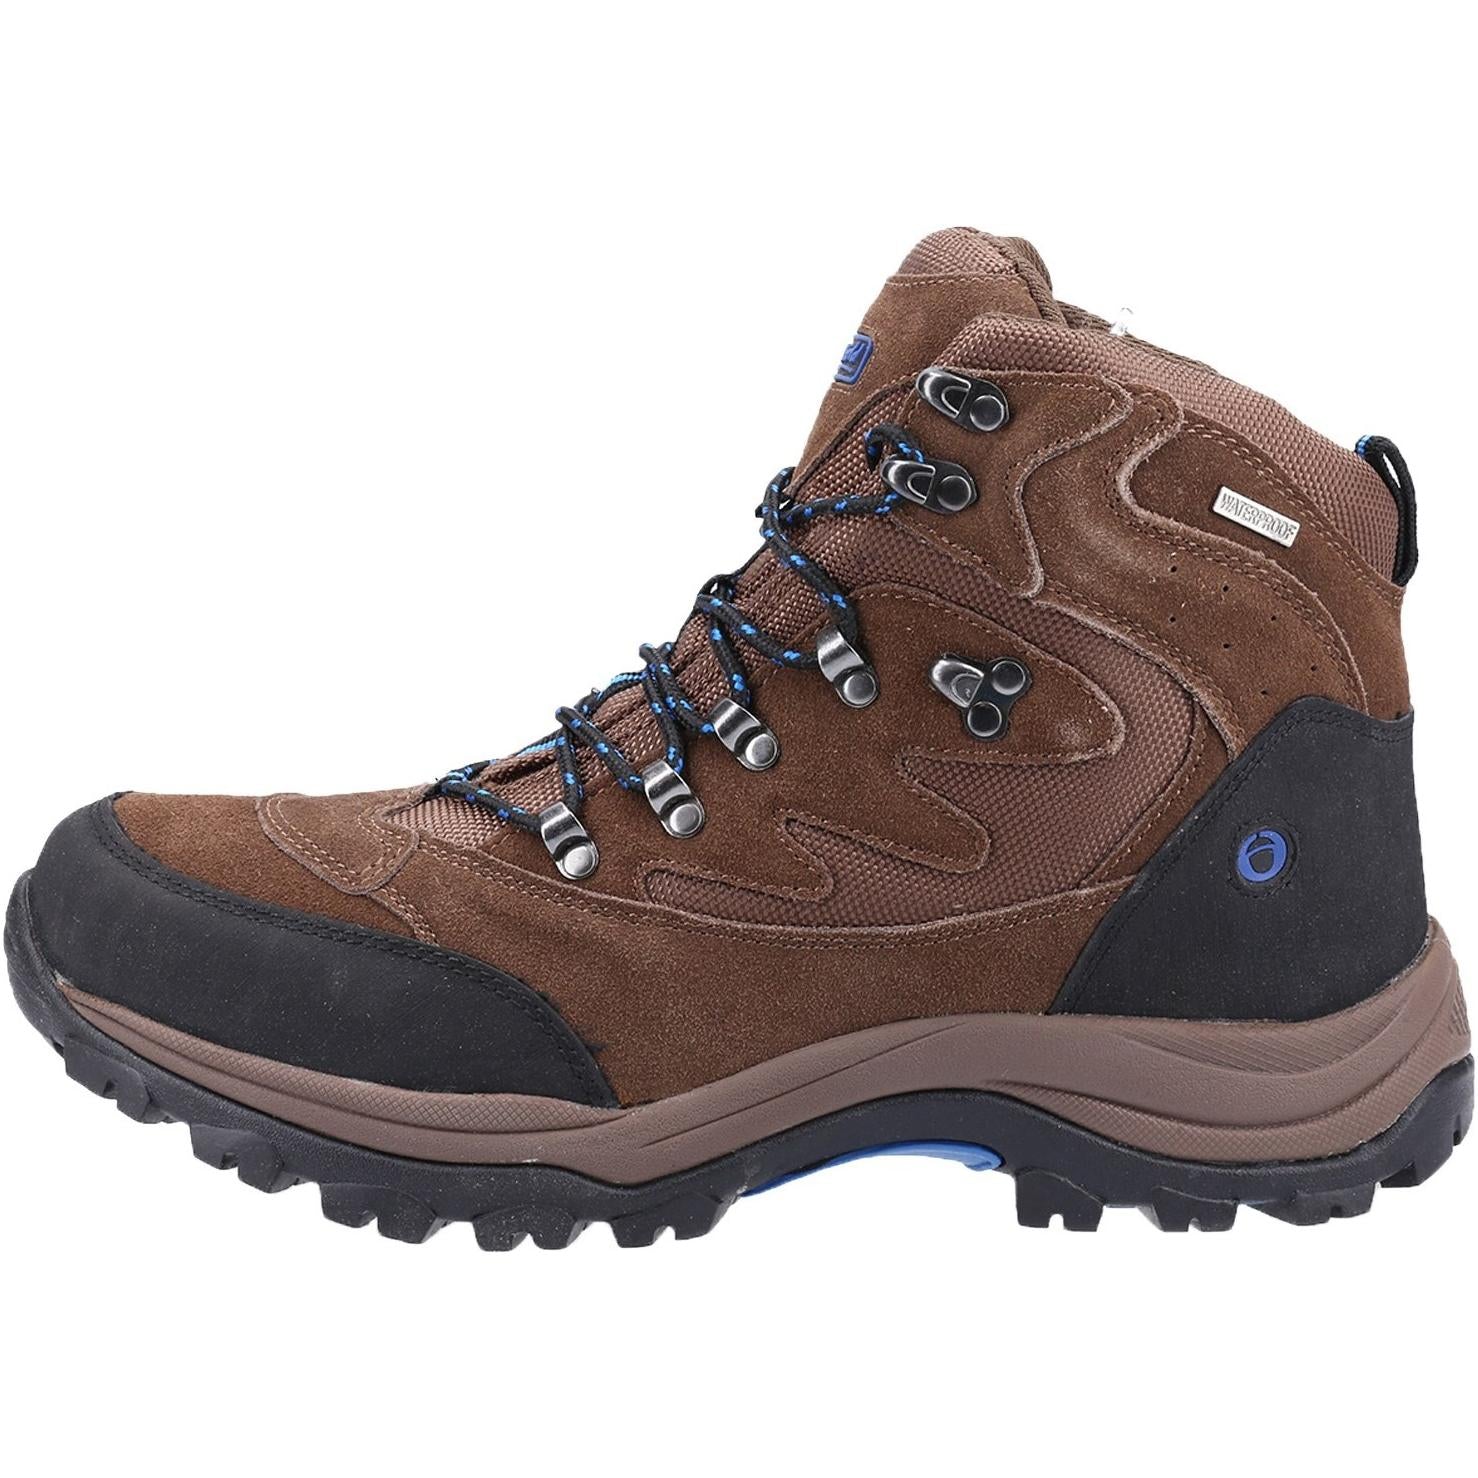 Cotswold Oxerton Waterproof Hiker Boots